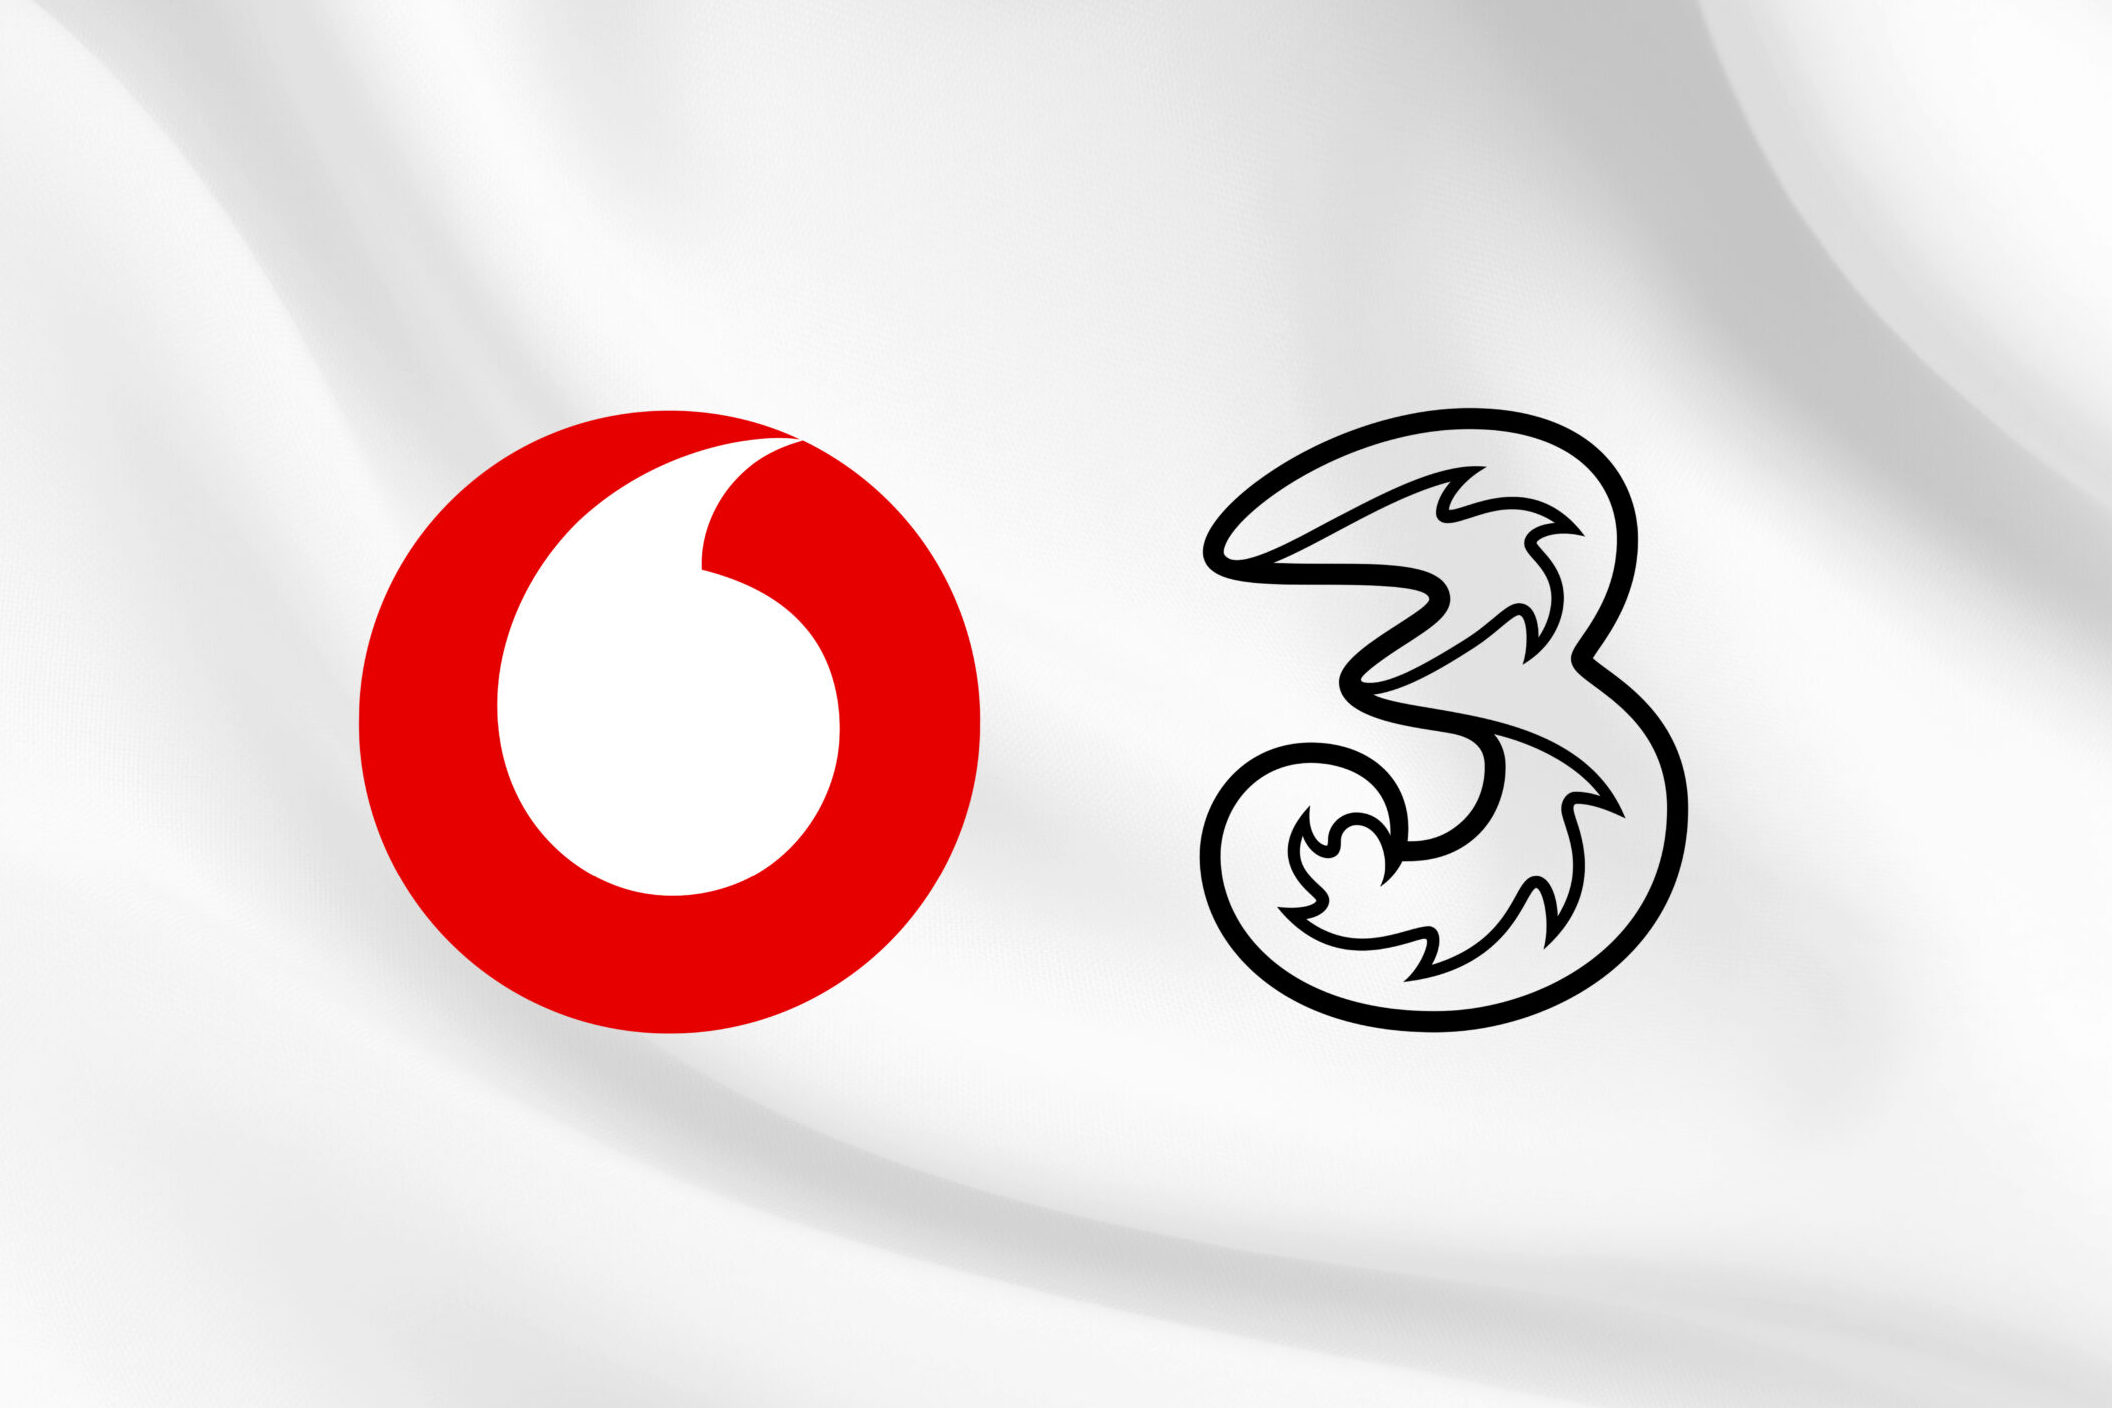 Vodafone Three UK logos side by side